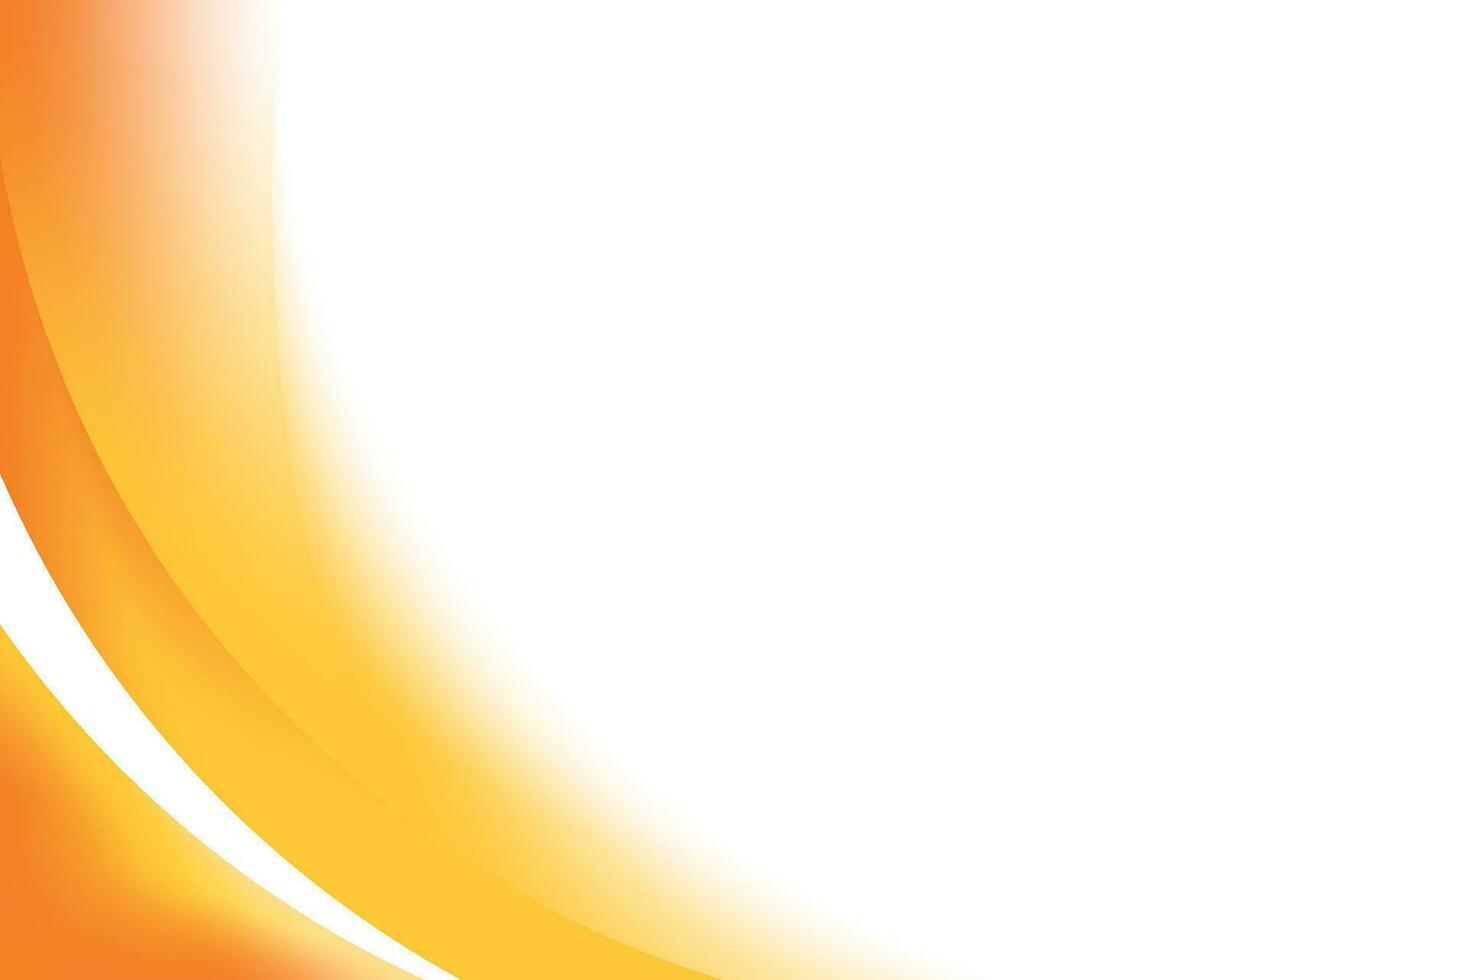 Abstract Orange Curvy Background vector